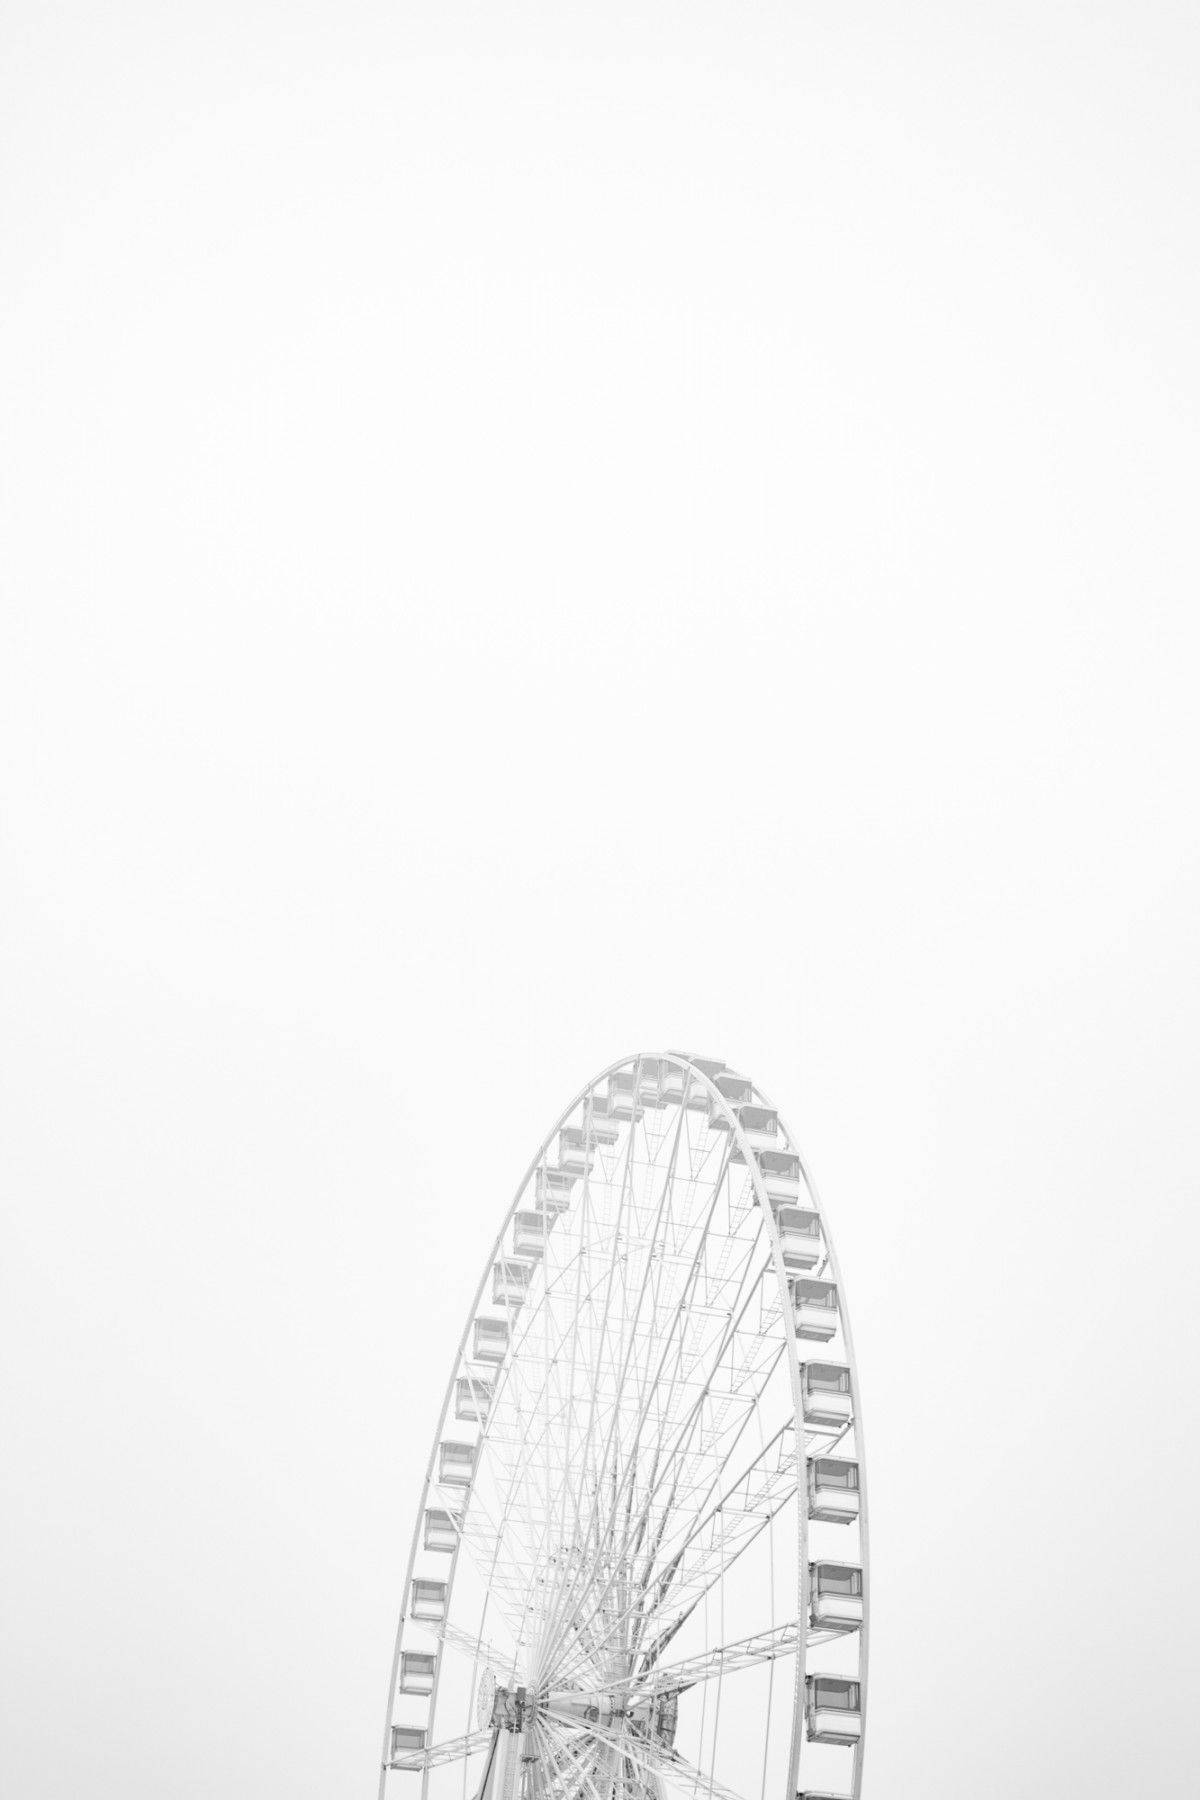 Gigantic Ferris Wheel In Cute White Aesthetic Background